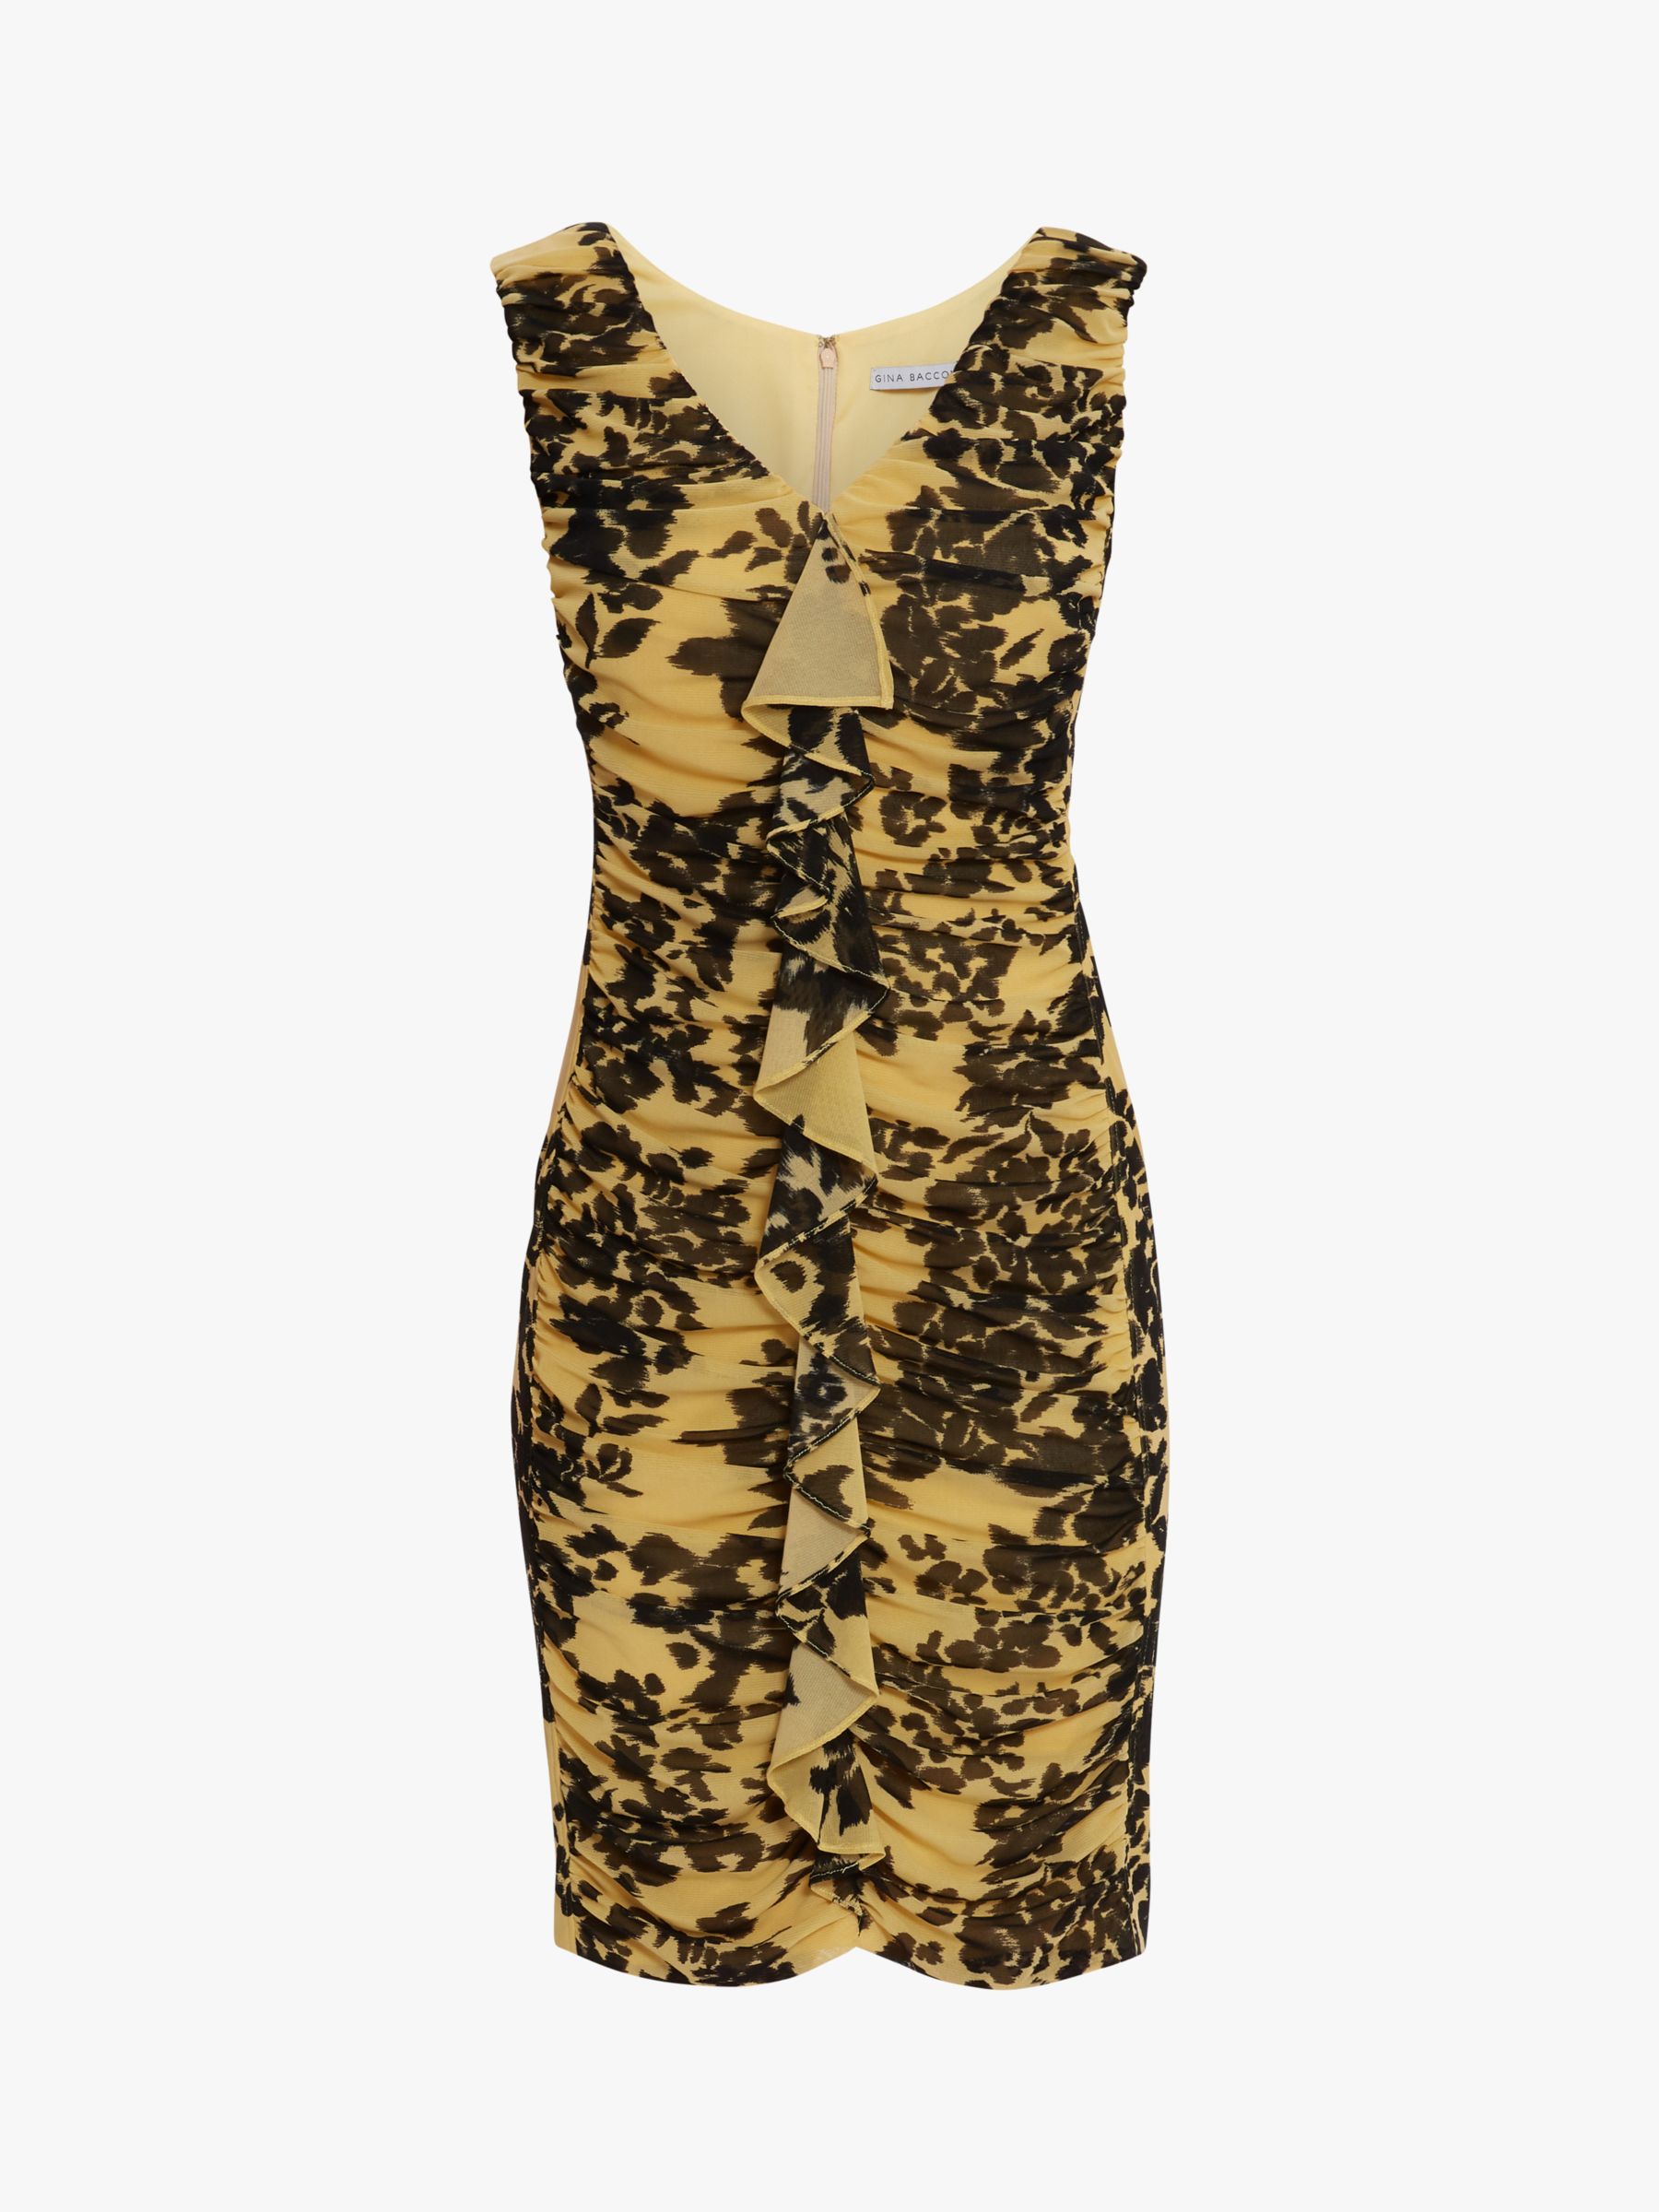 Gina Bacconi Joannie Floral Mesh Dress, Yellow/Black, 22